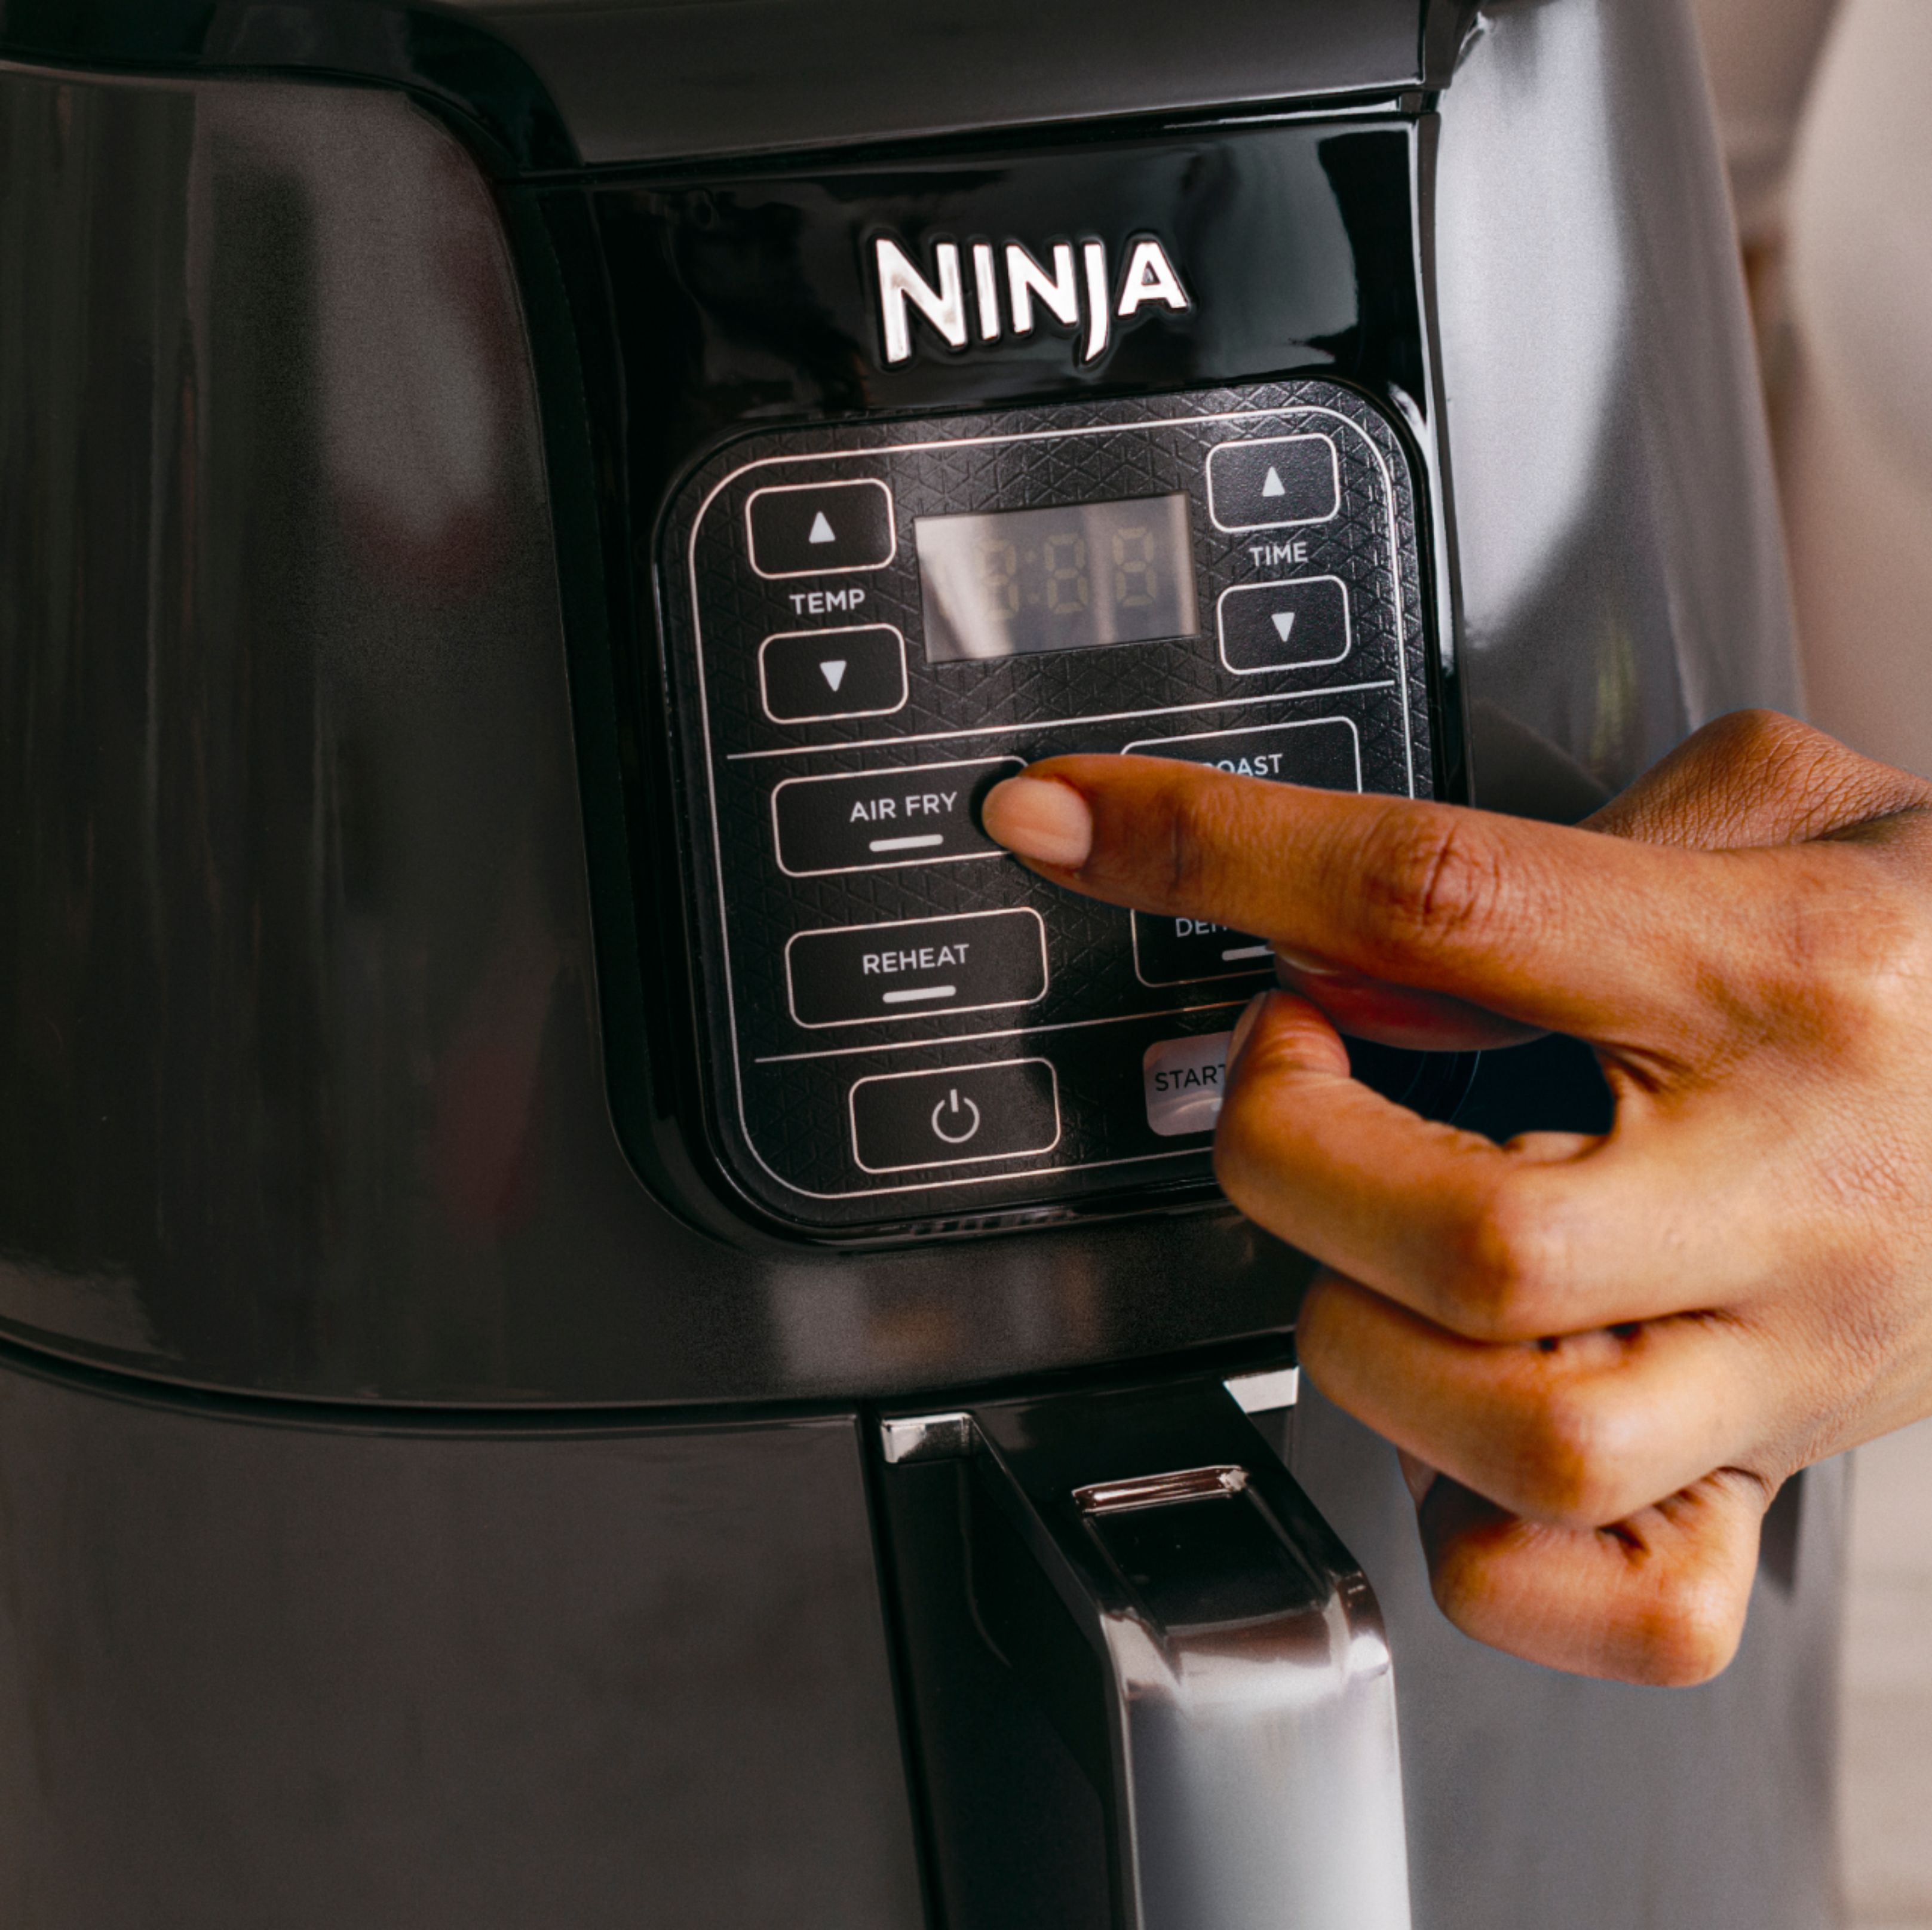 Best Buy is having a major sale on the Ninja 10-qt. dual zone air fryer : r/ airfryer